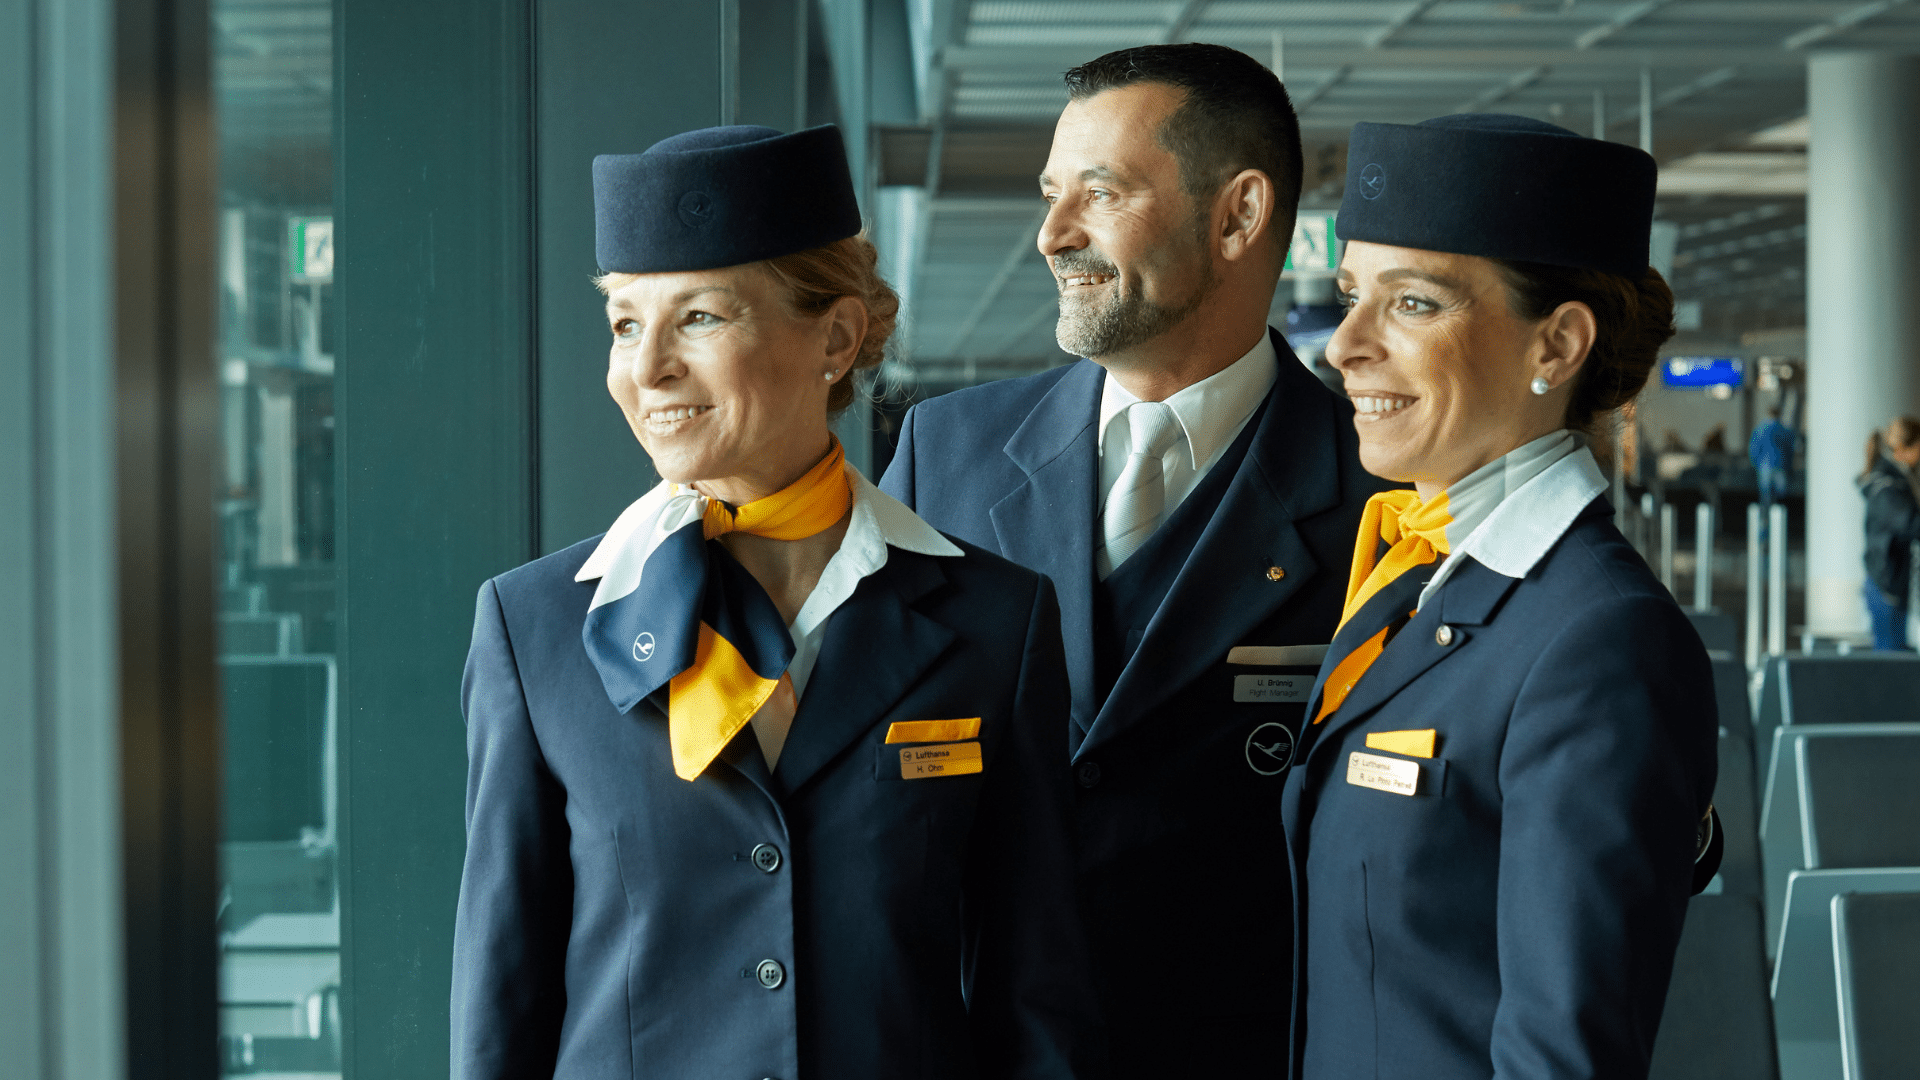 Lufthansa Crew